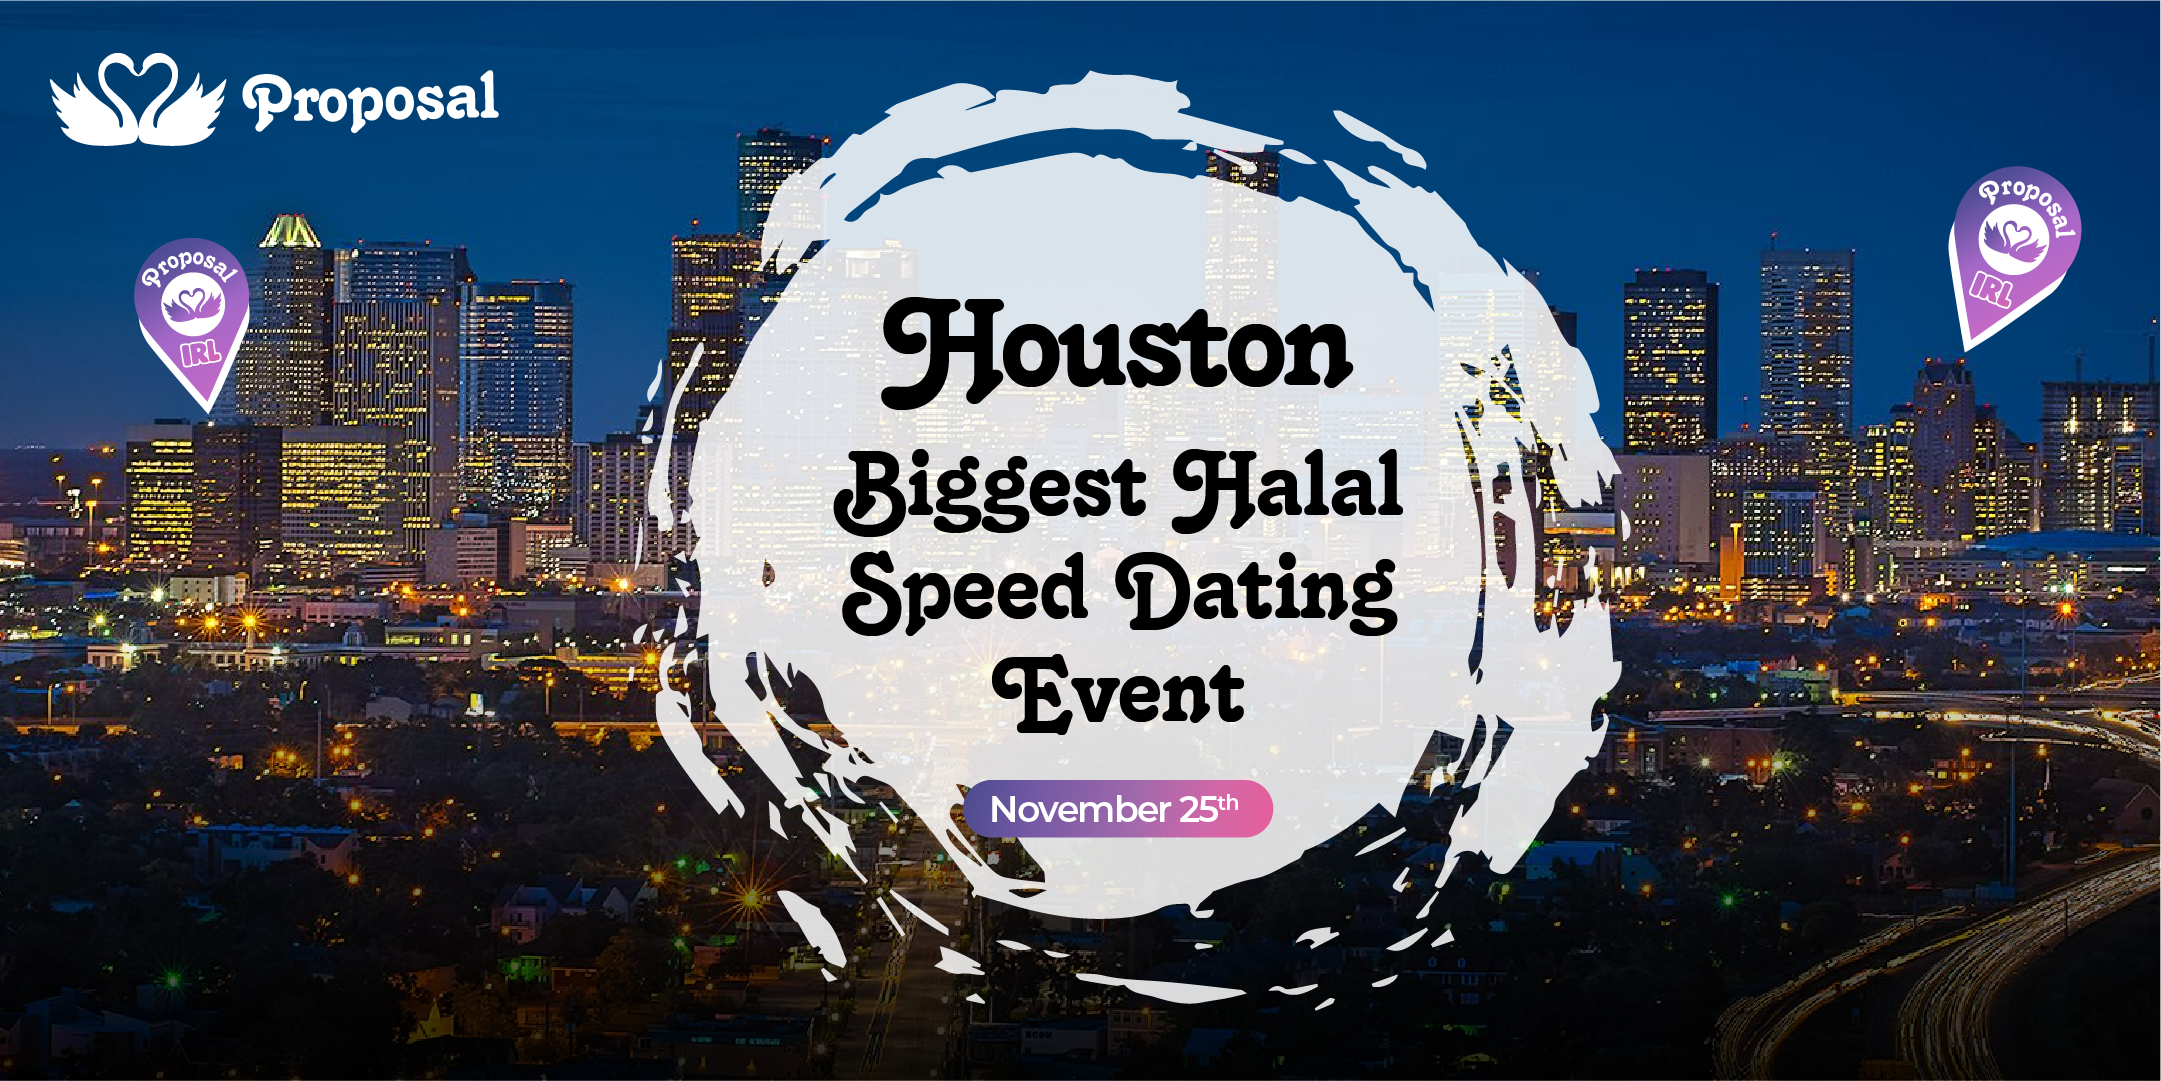 Proposal Presents BIGGEST HALAL Speed Dating Event Houston